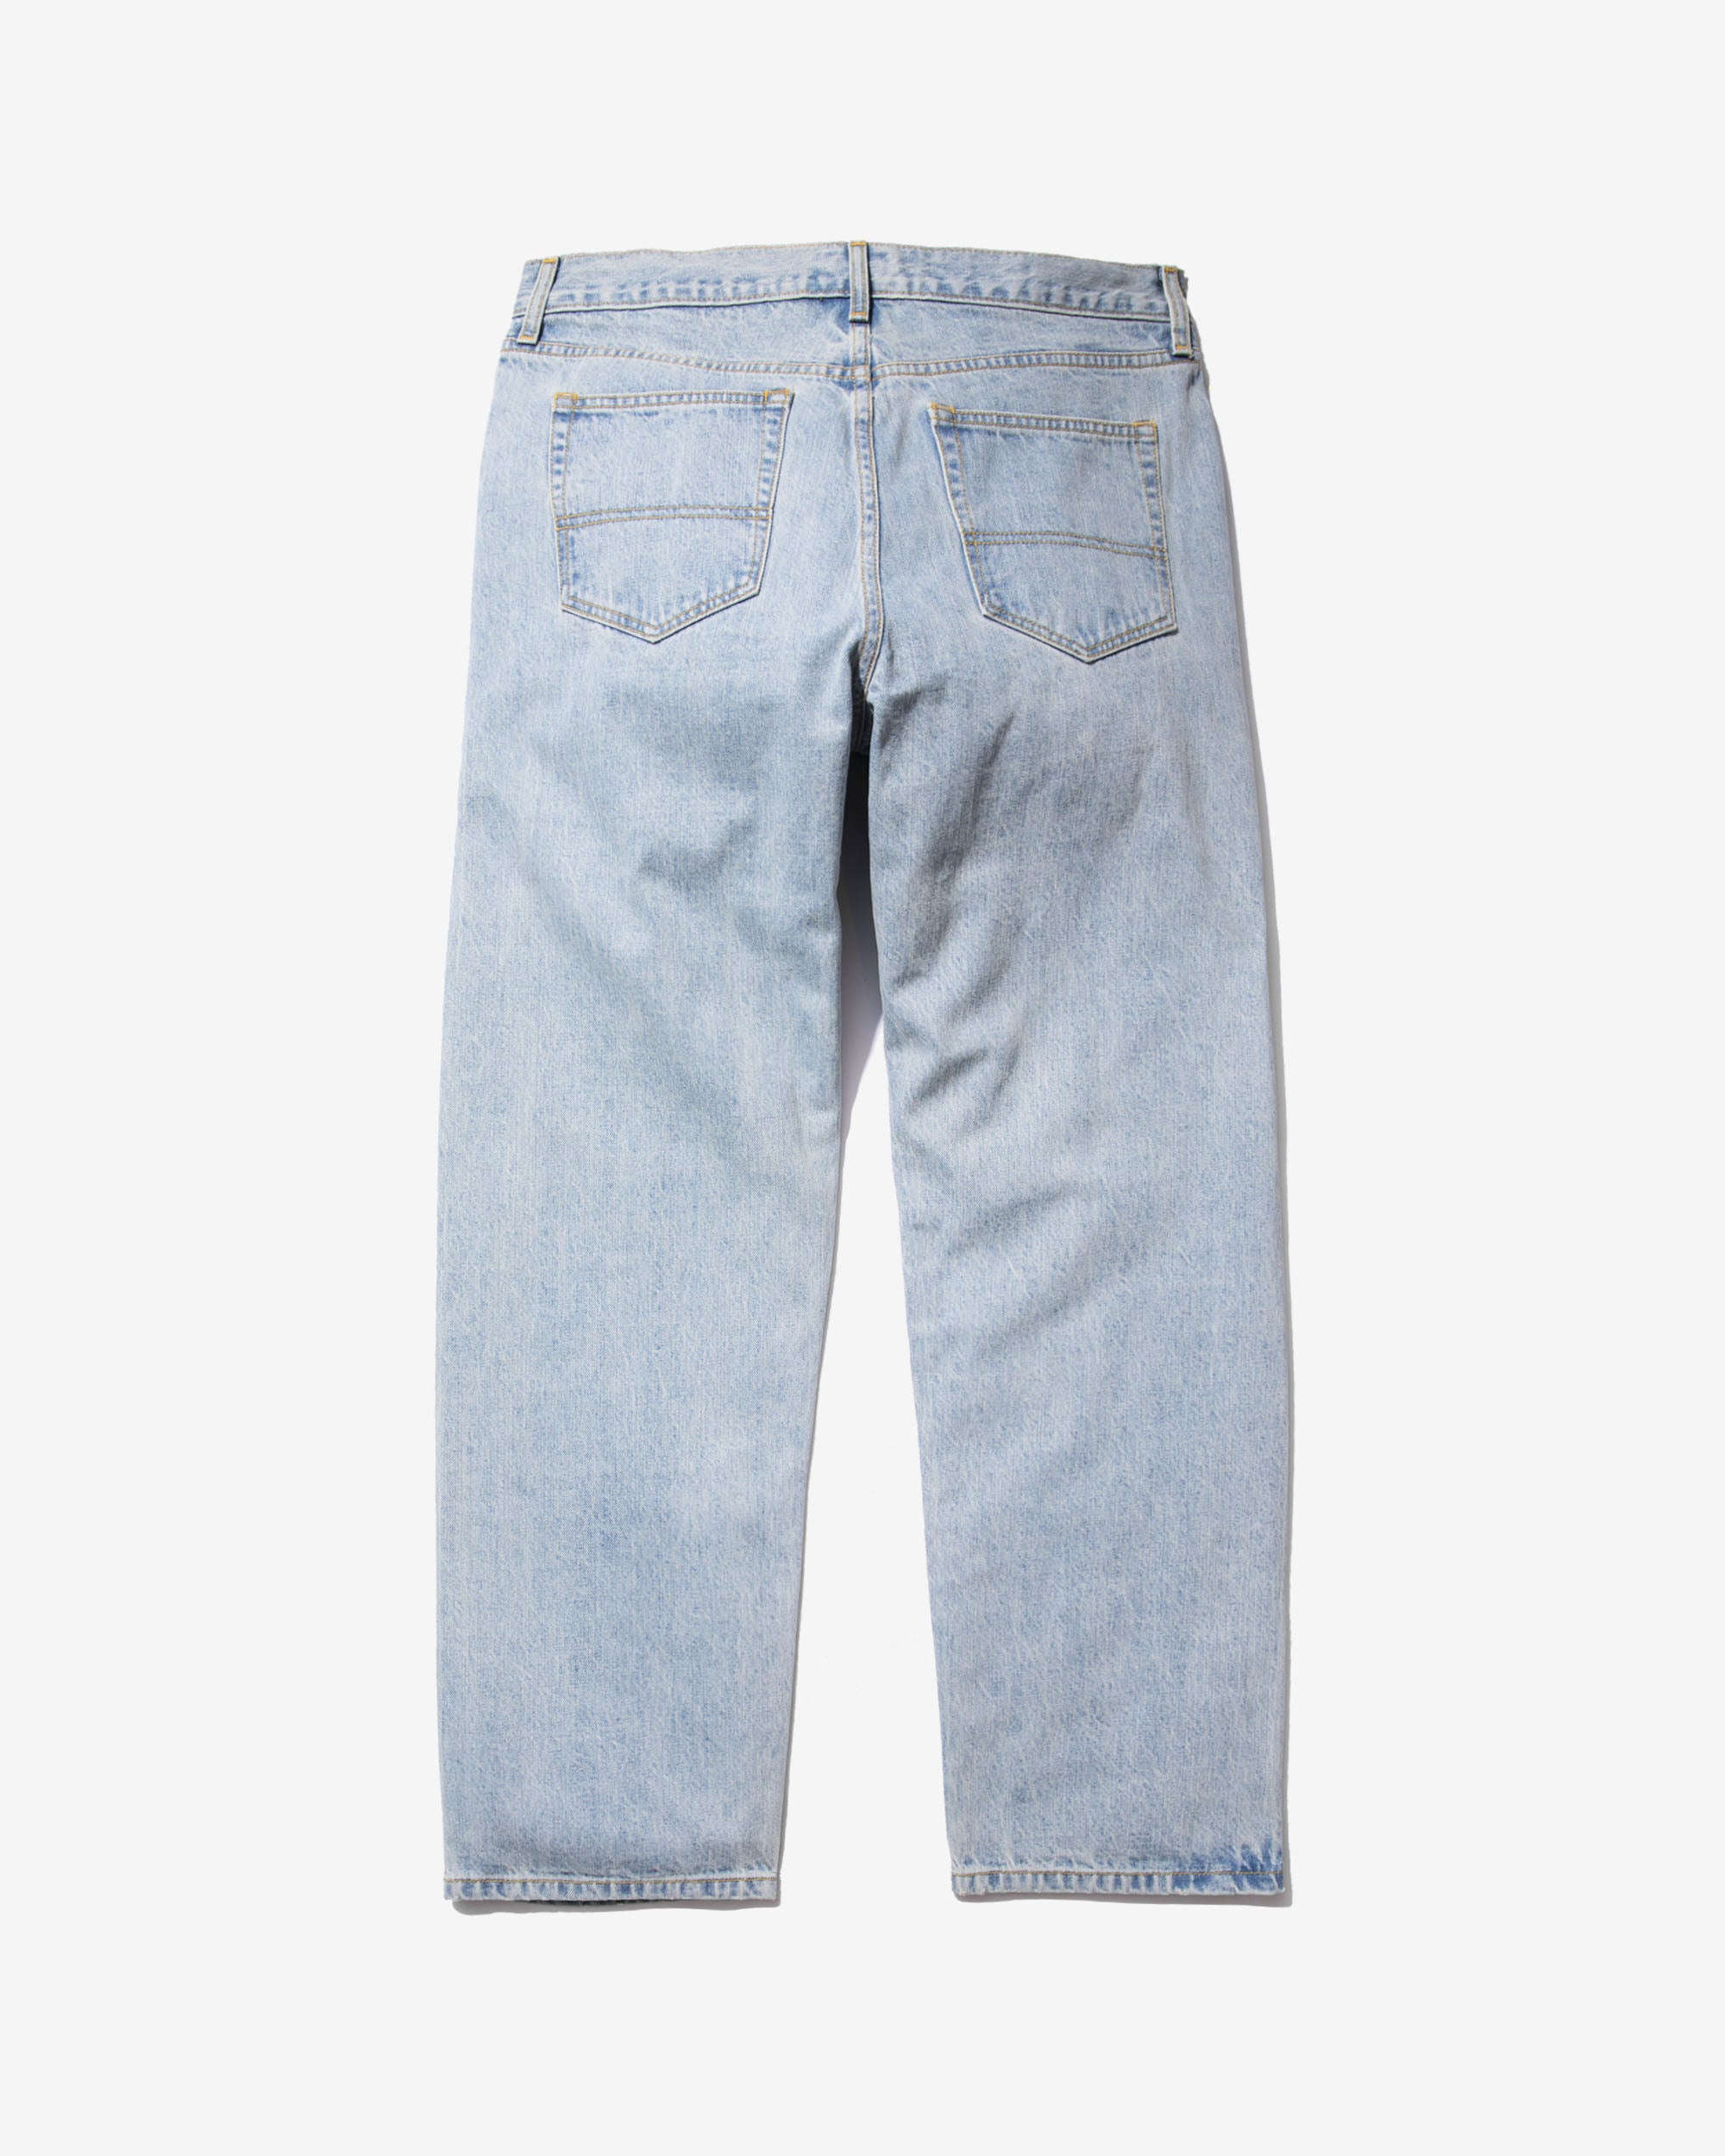 Men's Denim Premium Jeans Pants [28